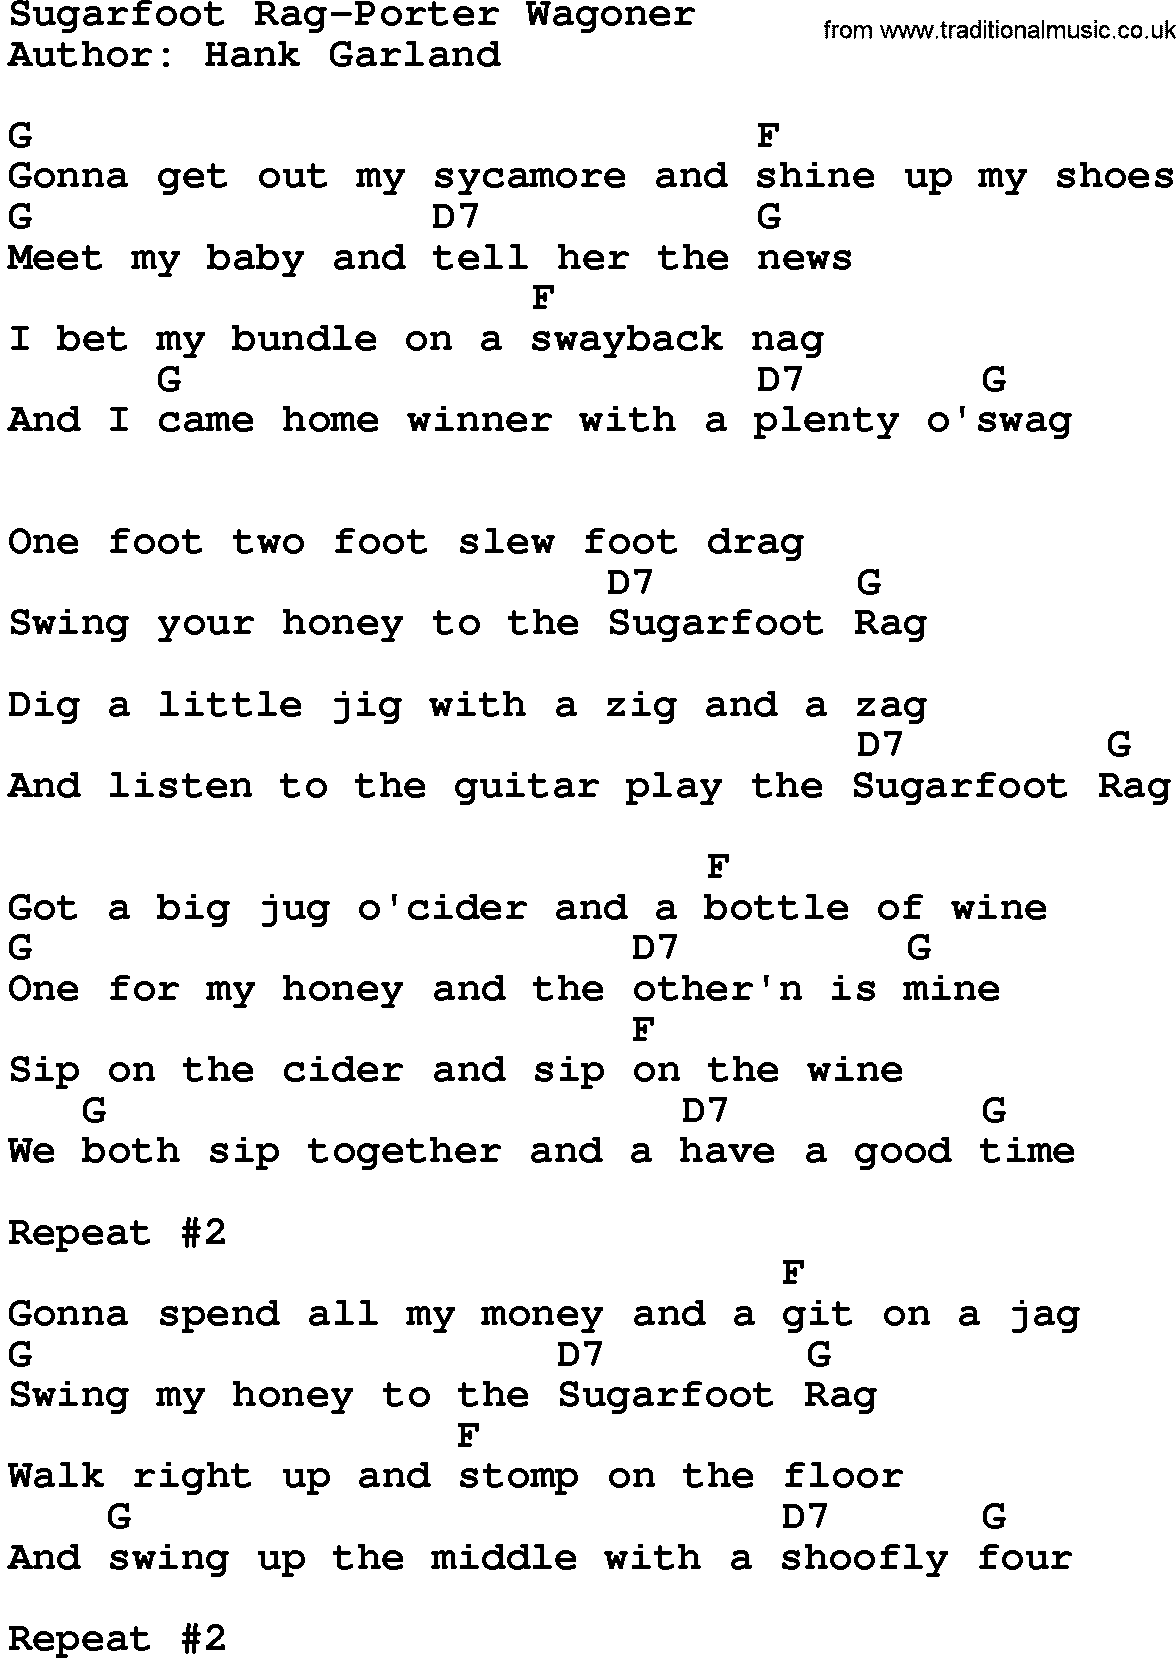 Country music song: Sugarfoot Rag-Porter Wagoner lyrics and chords